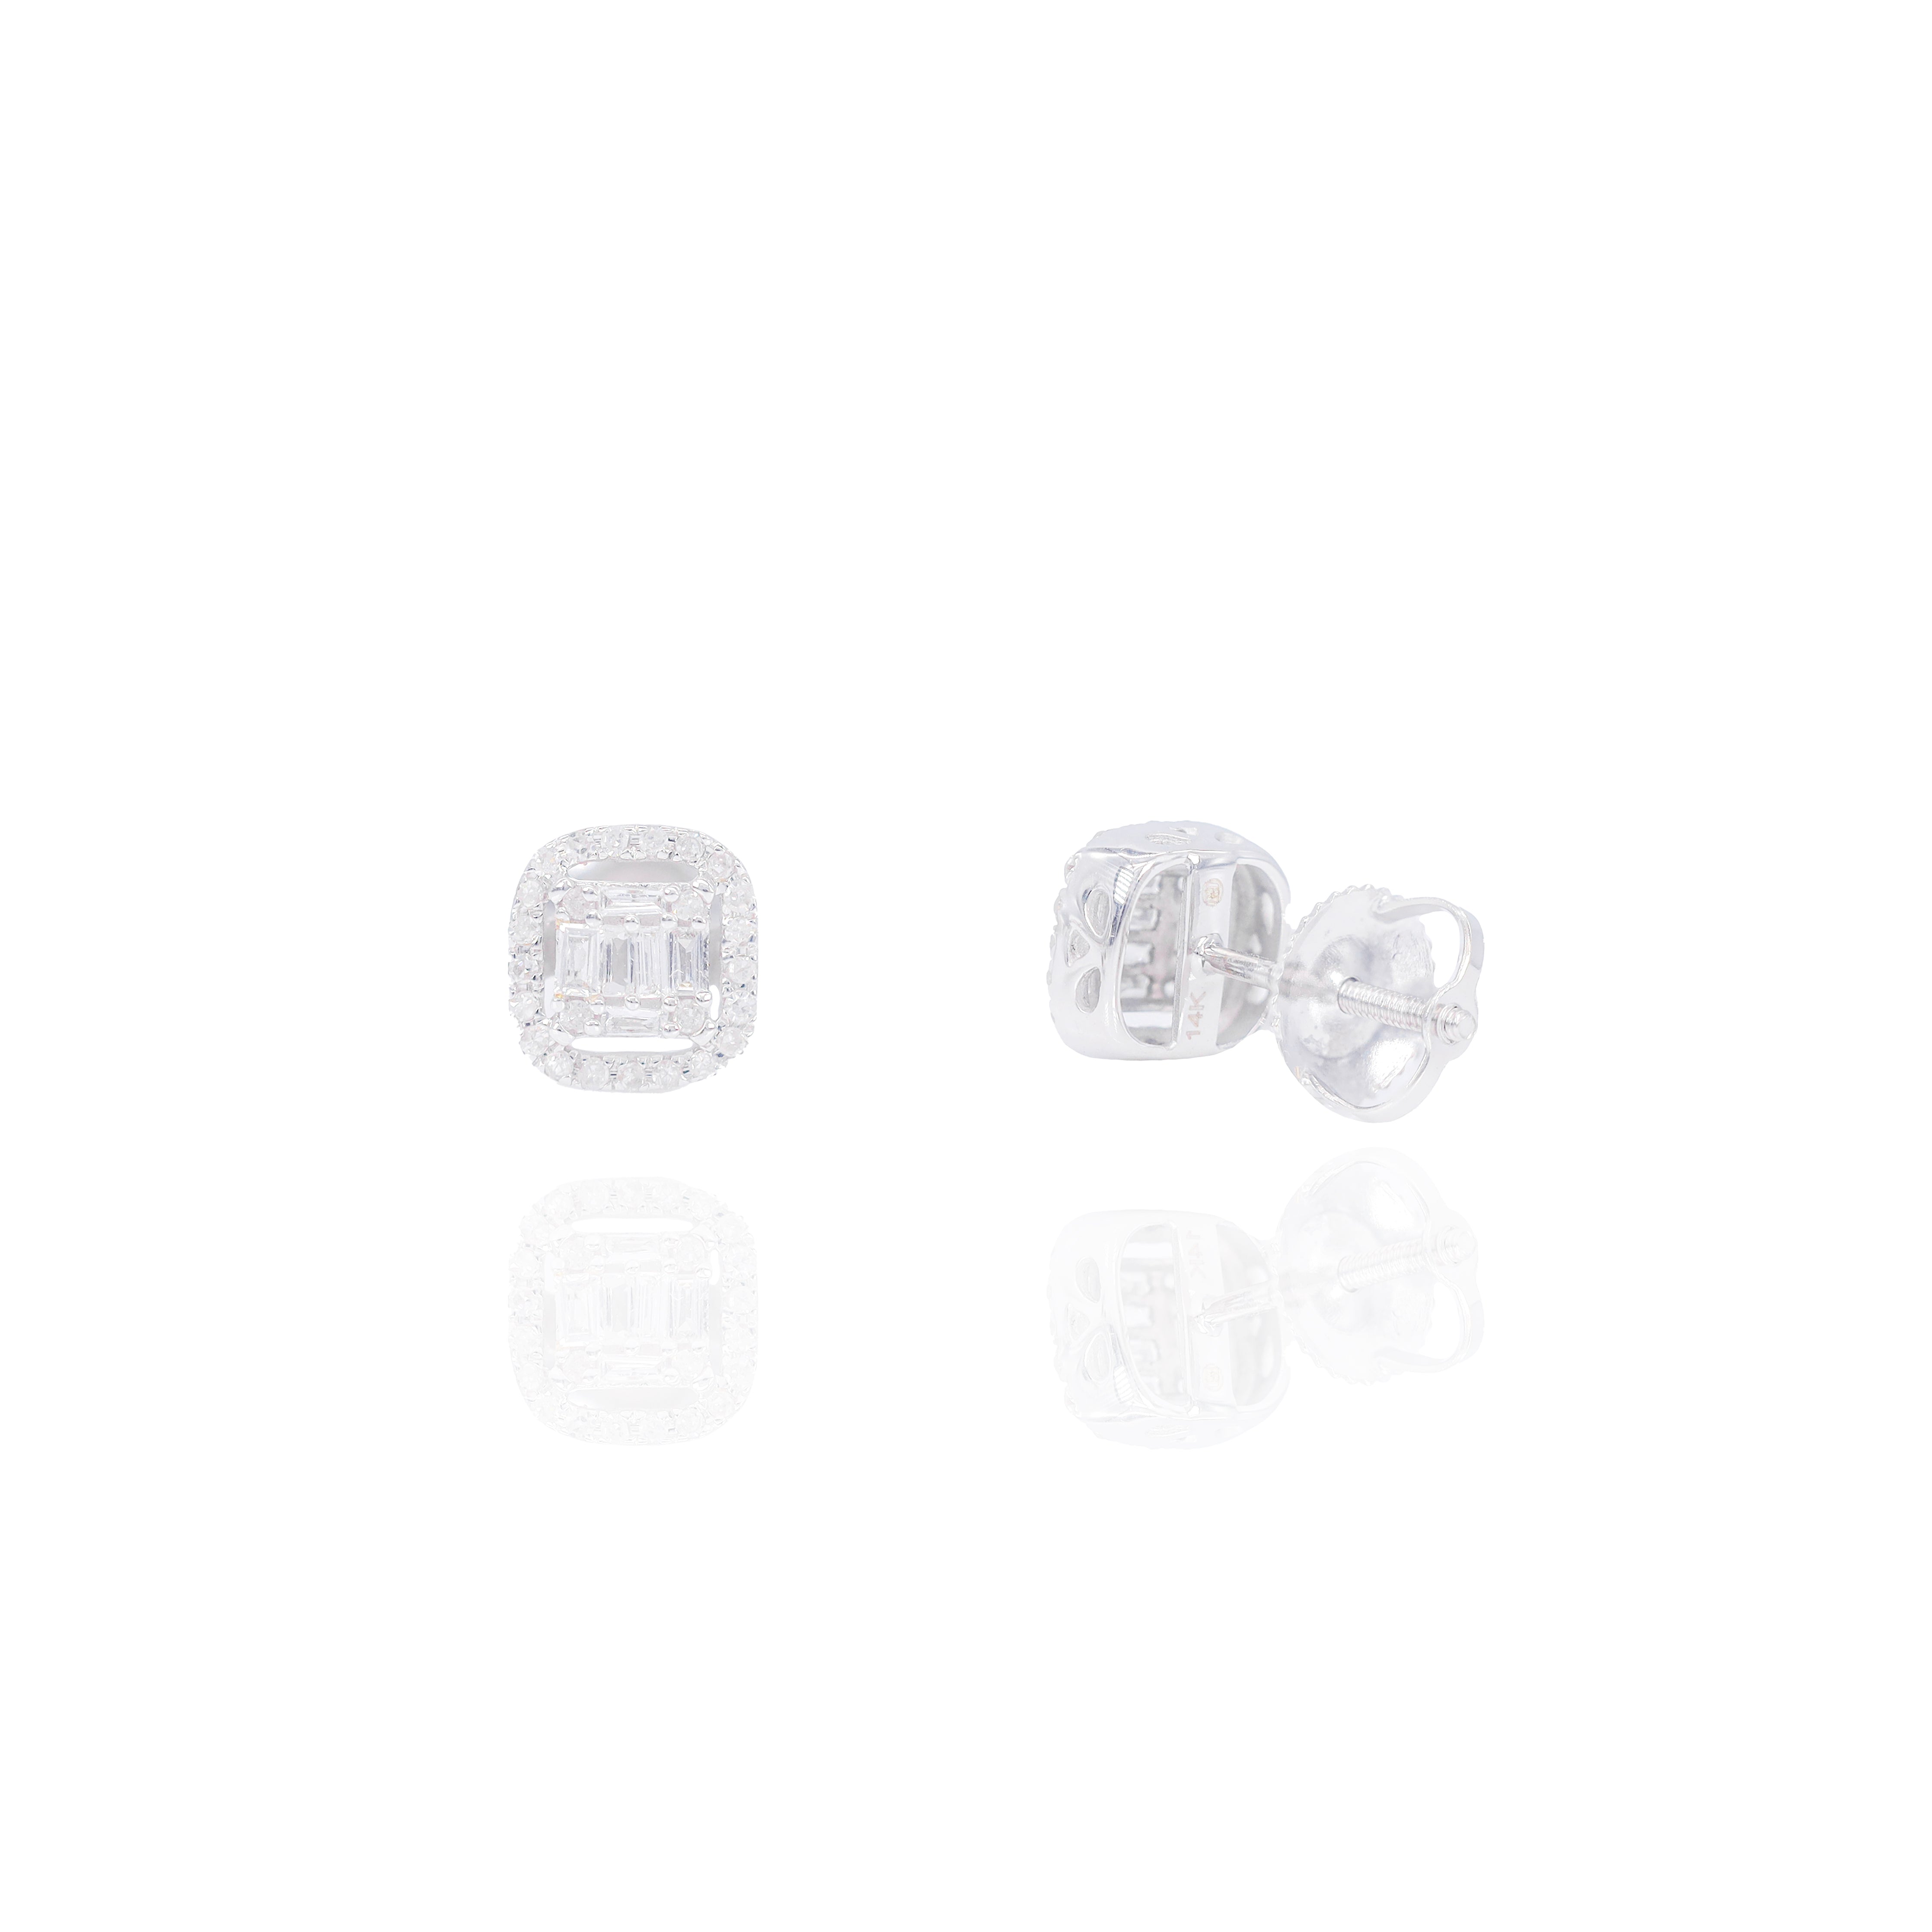 Square Shaped Baguette Diamond Earrings w/ Border